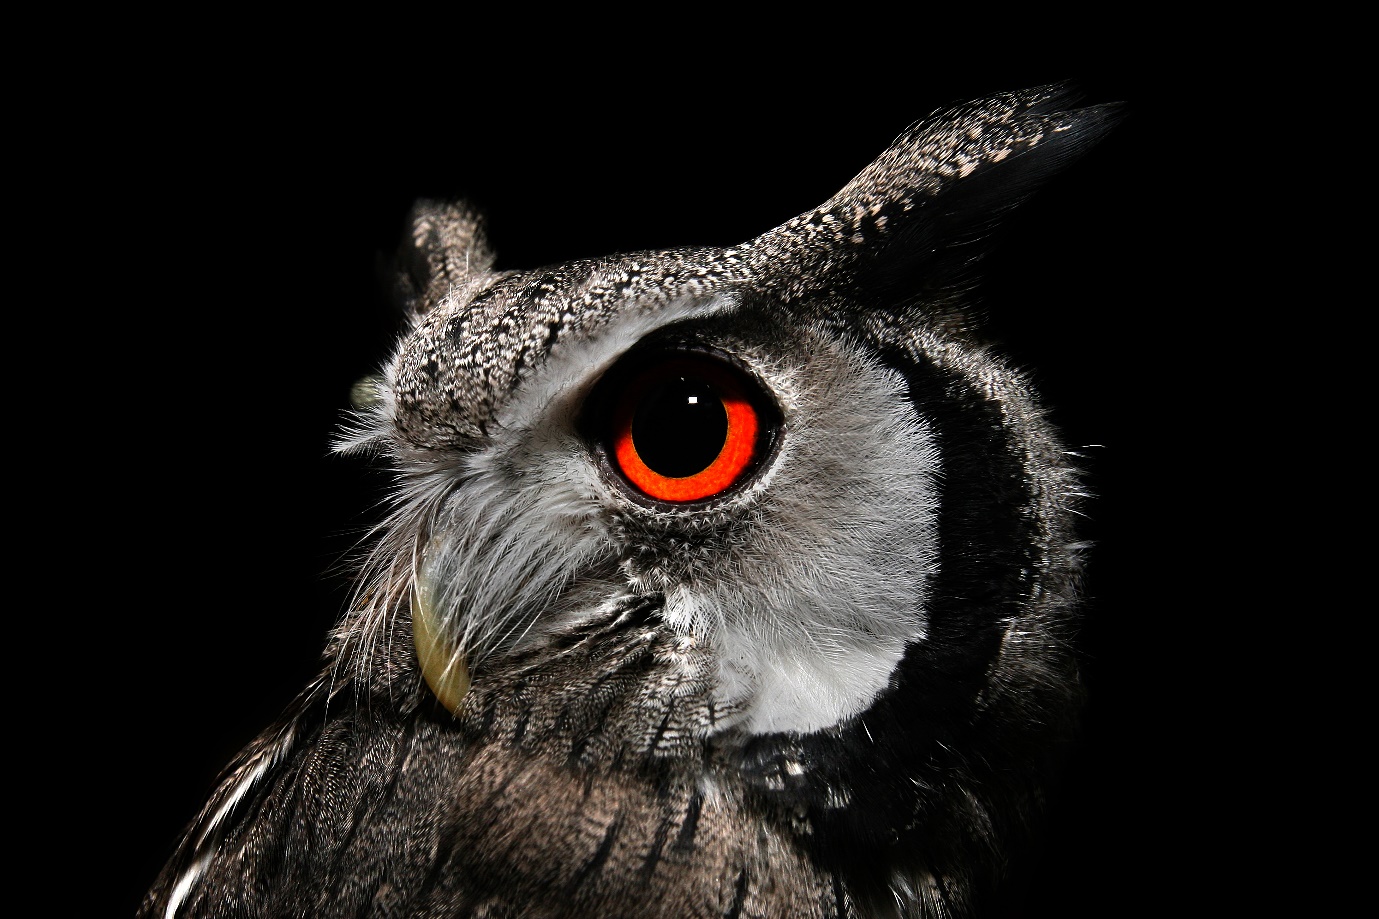 Photograph of an owl